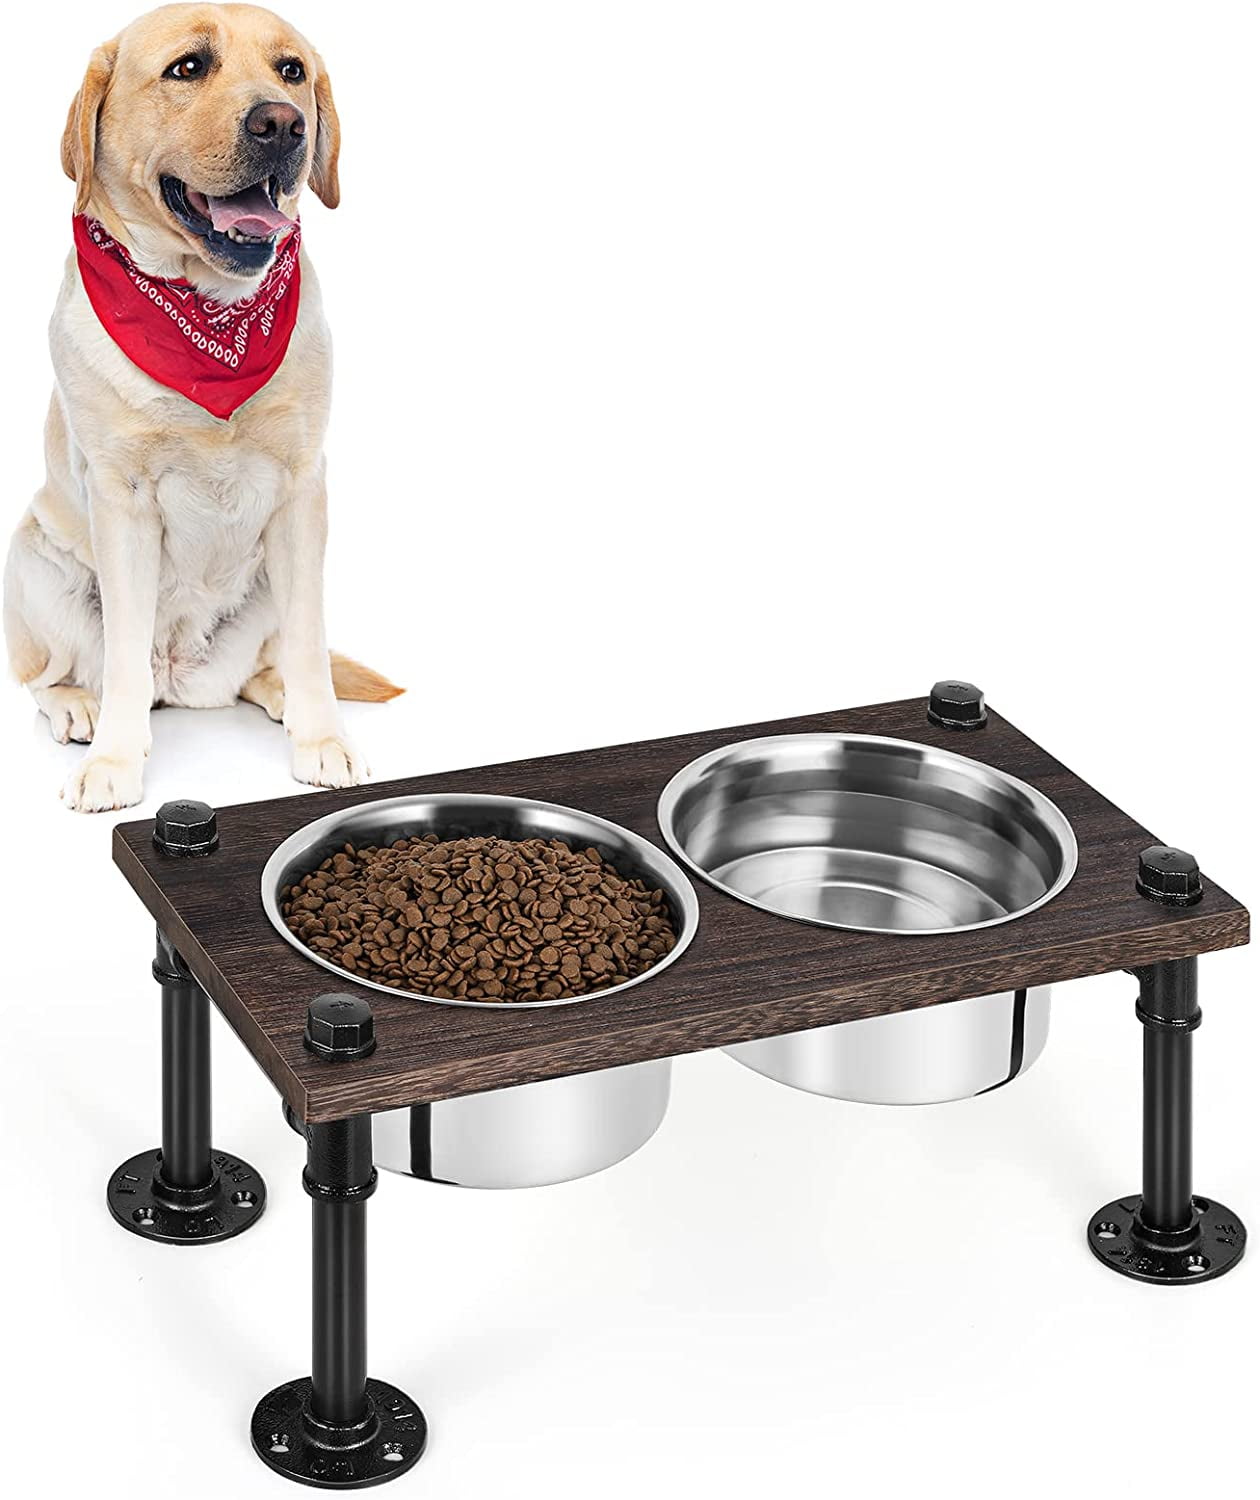 Elevated Dog Bowl Medium Stand